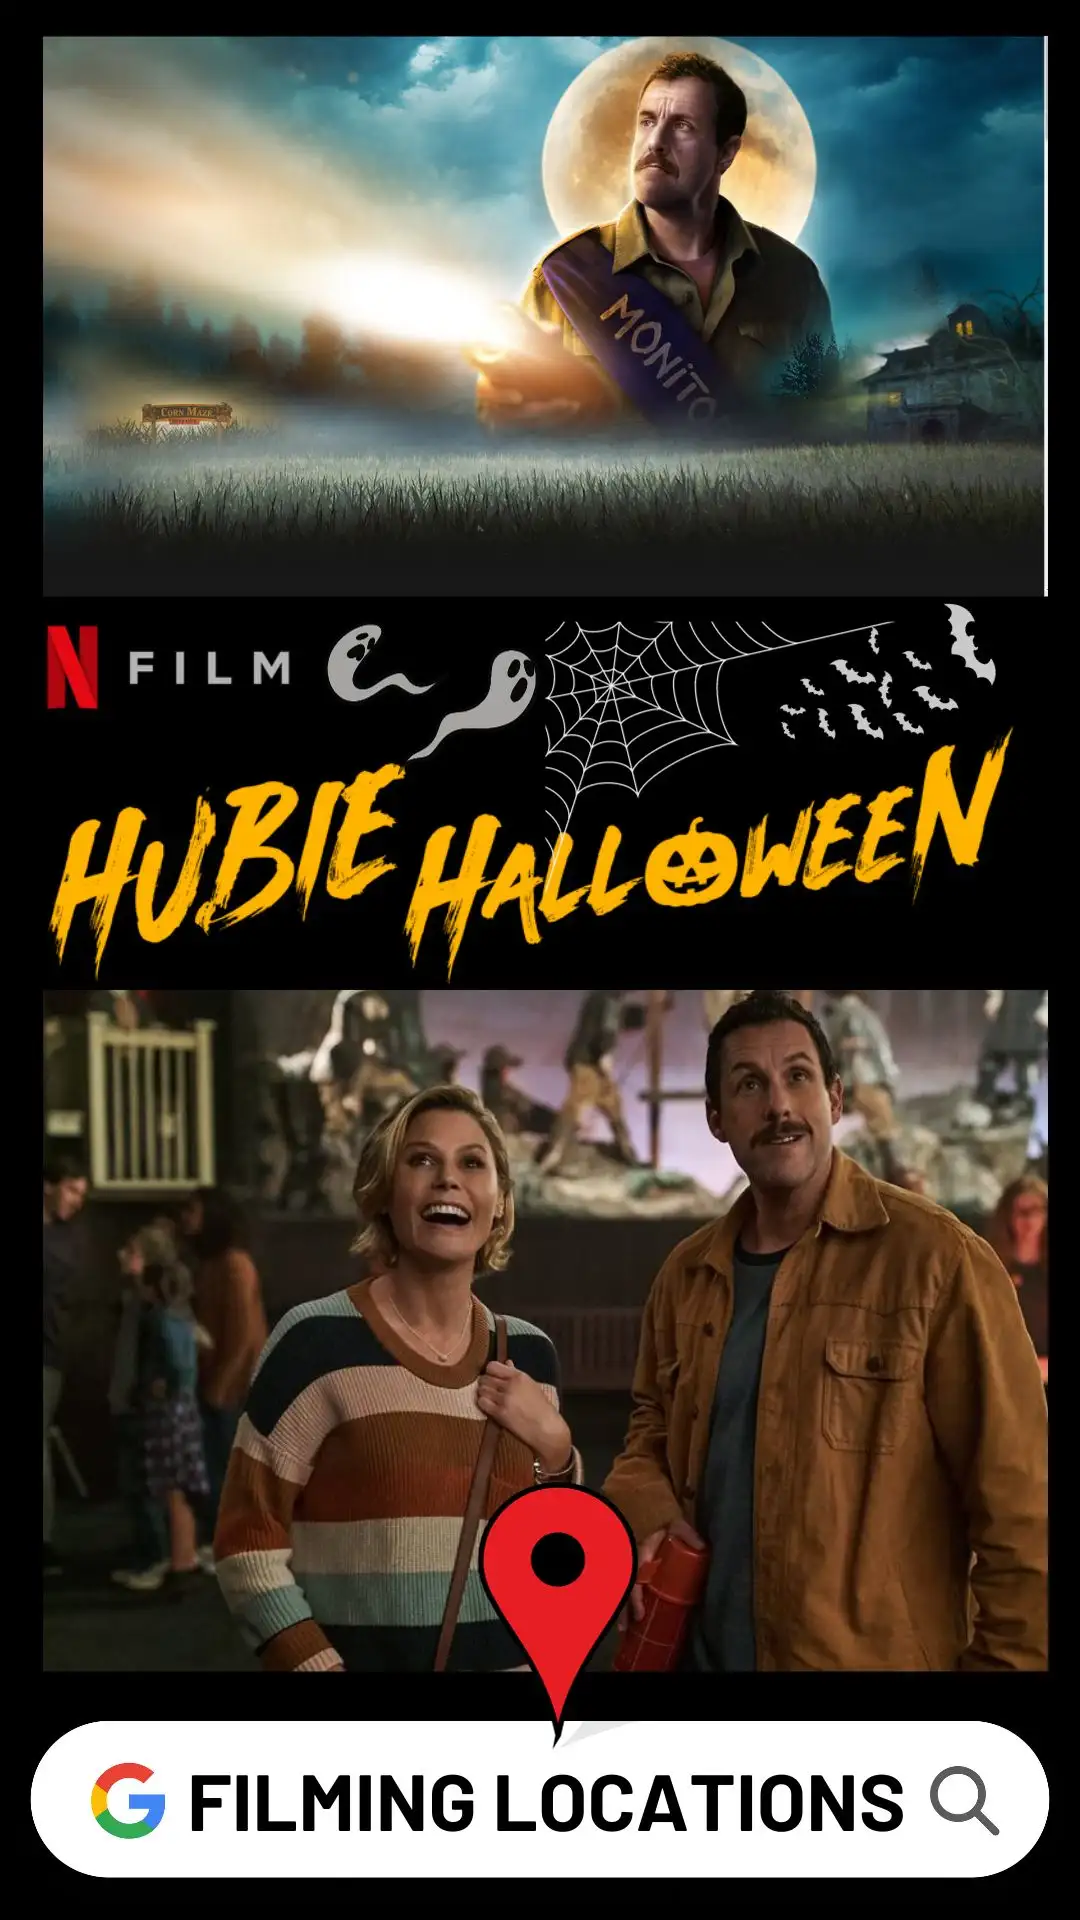 Hubie Halloween Filming Locations